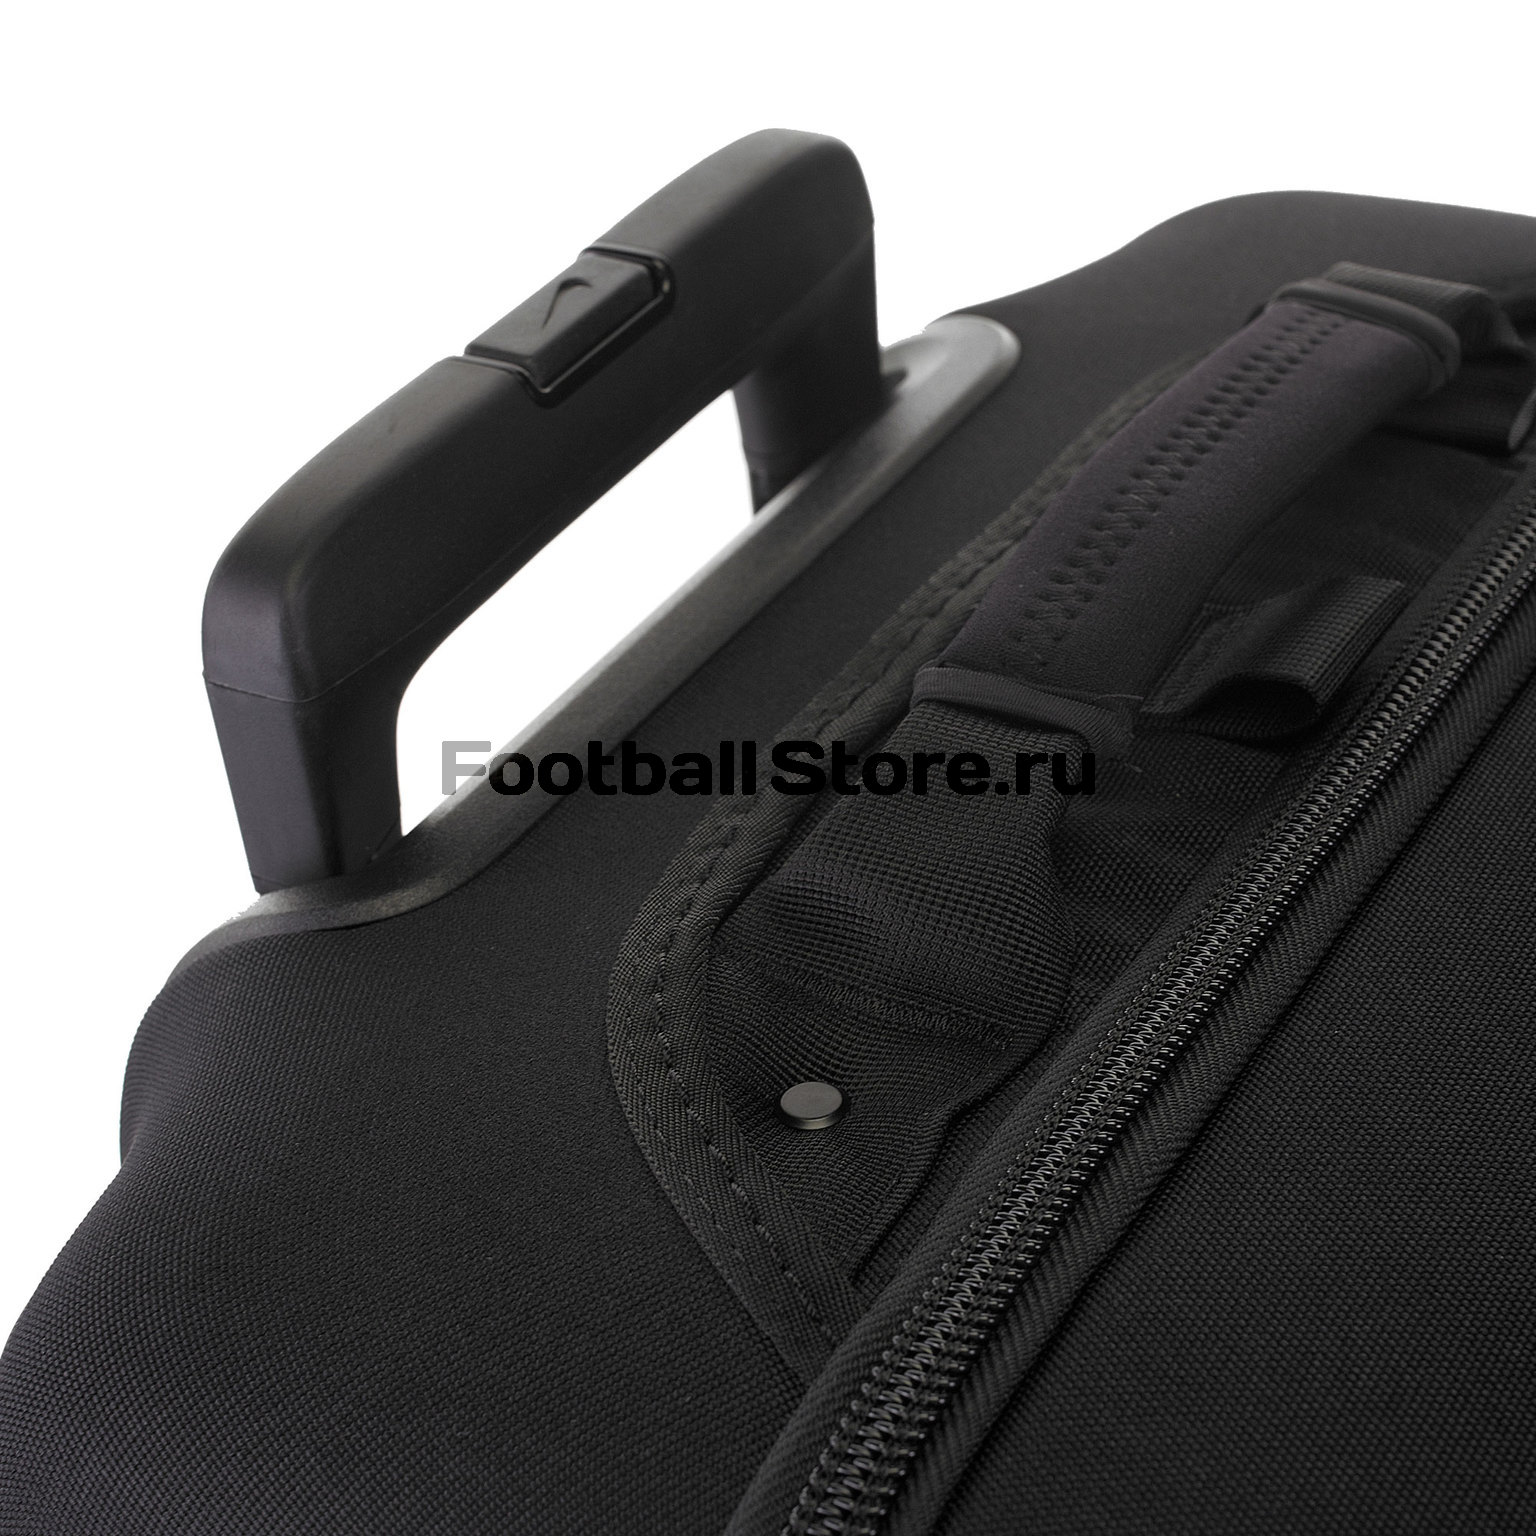 Сумка-чемодан Nike Medium Roller PBZ279-001